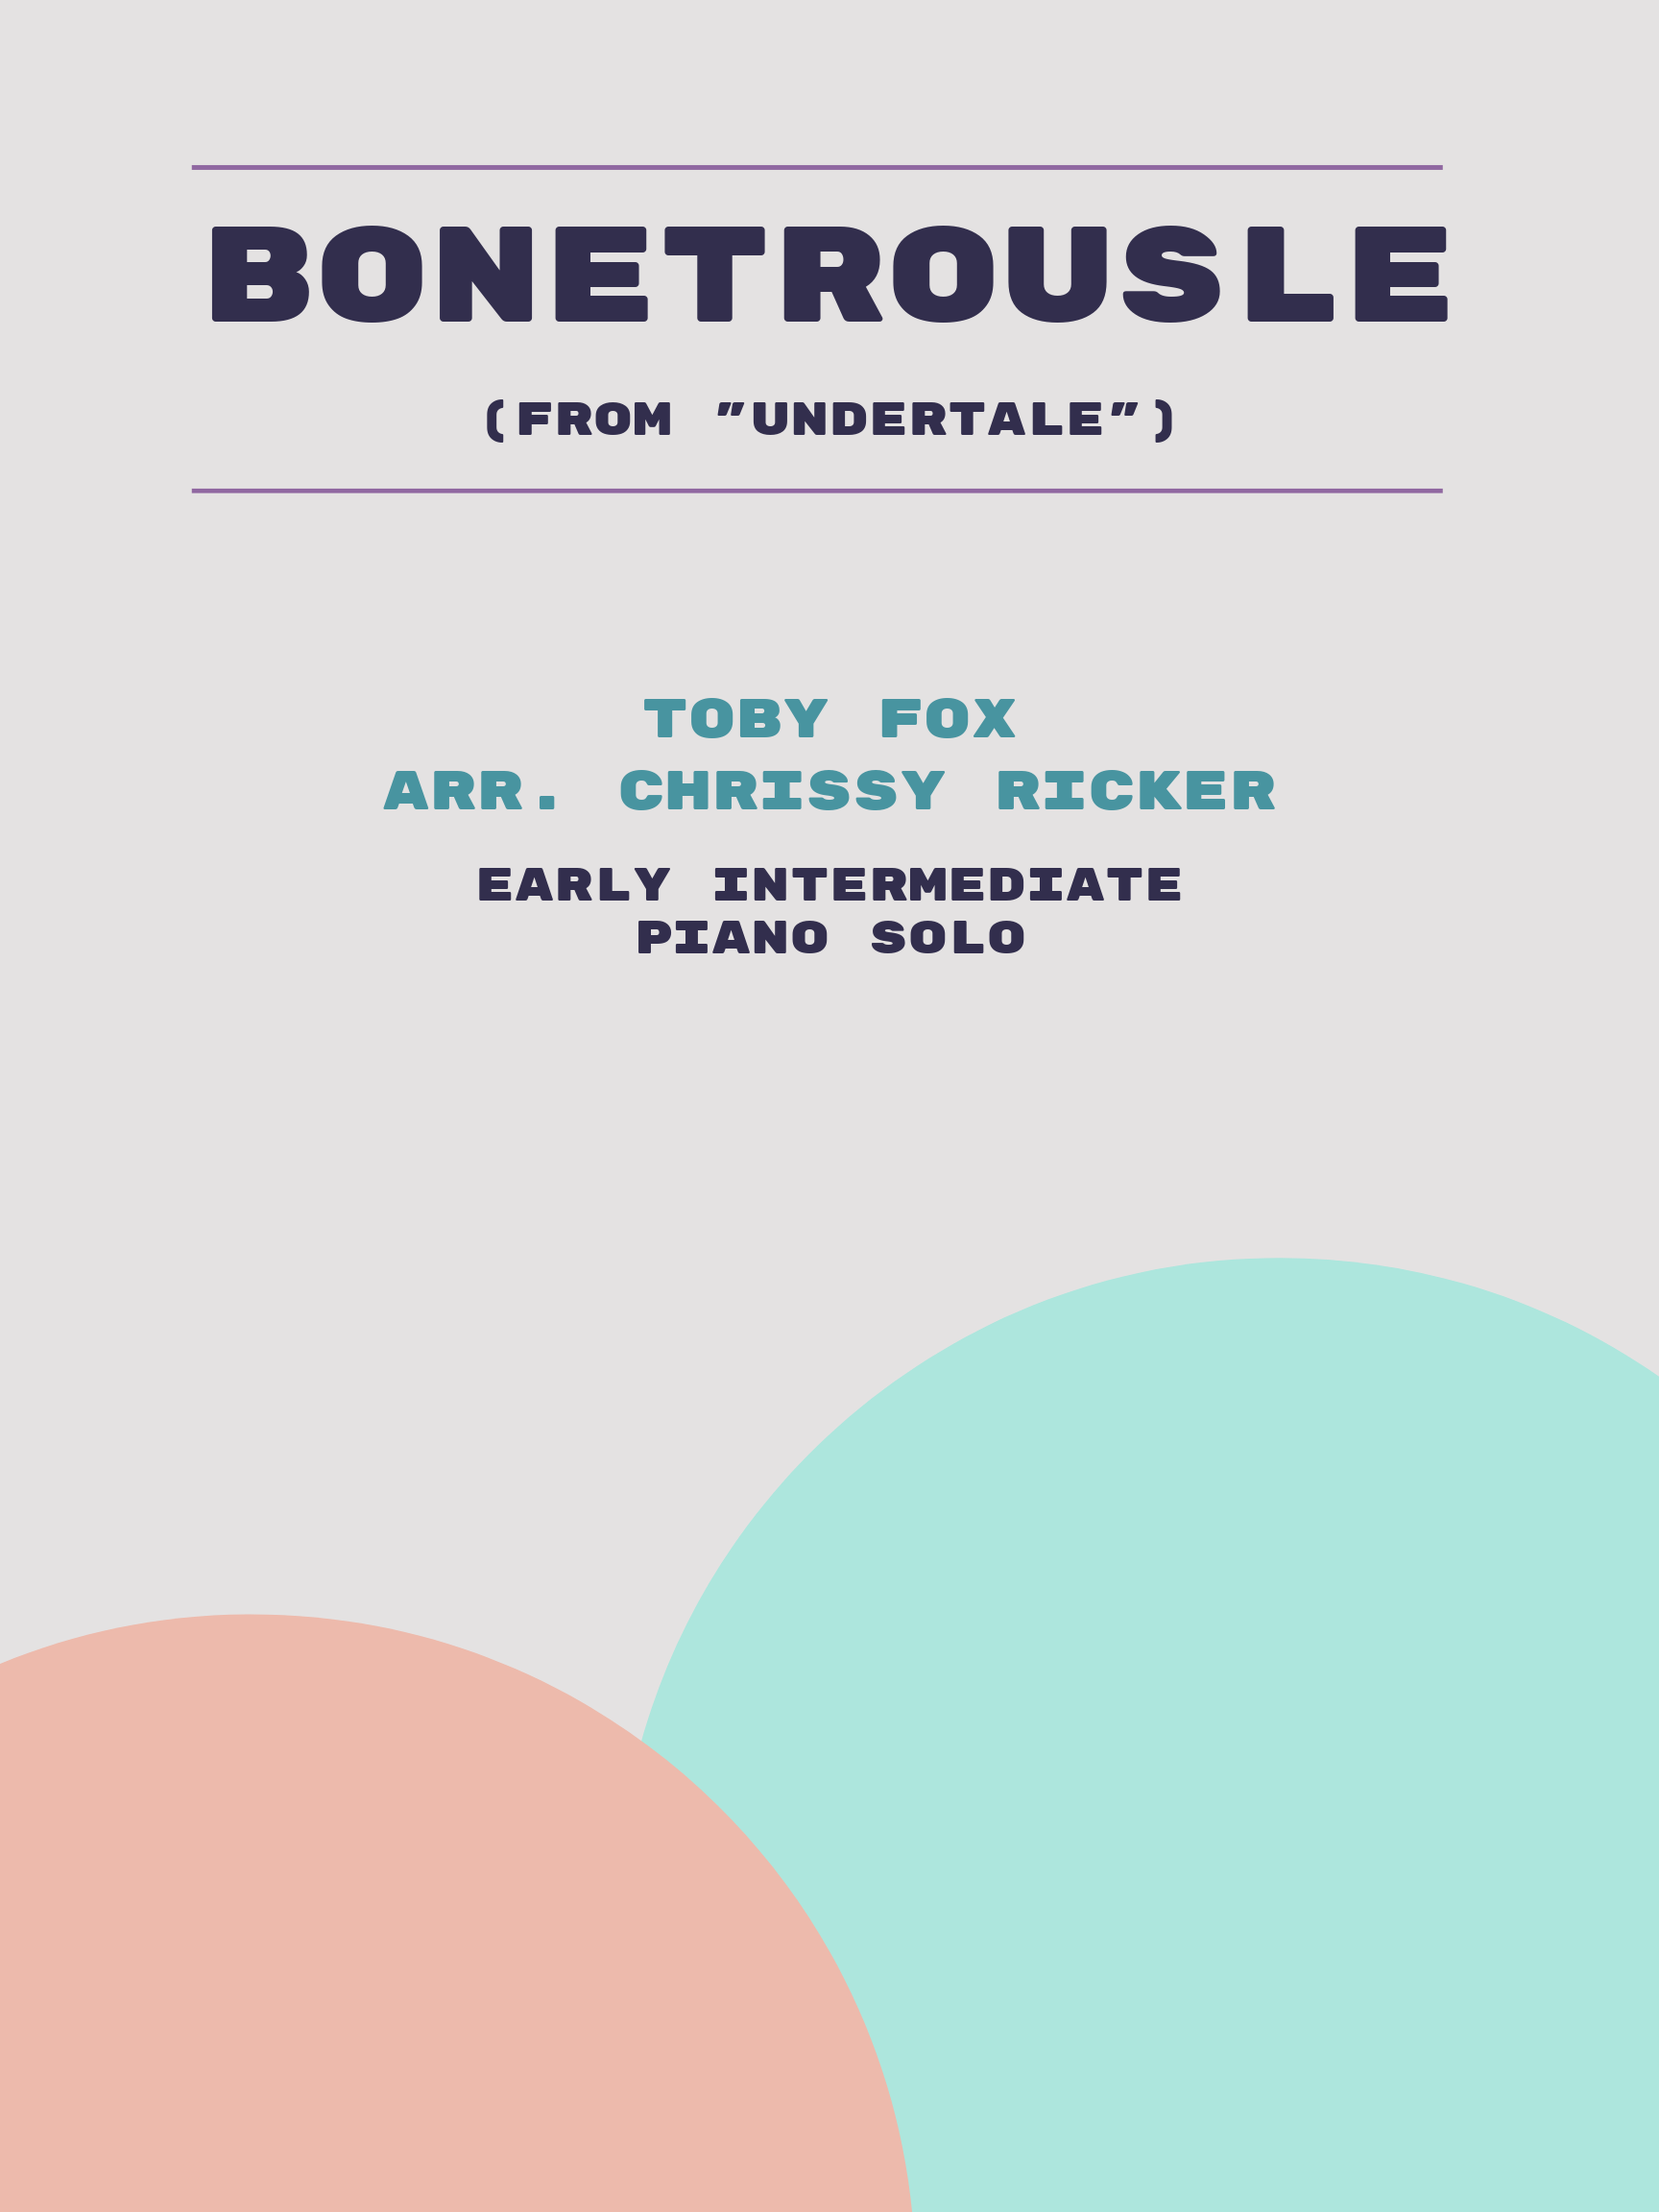 Bonetrousle by Toby Fox